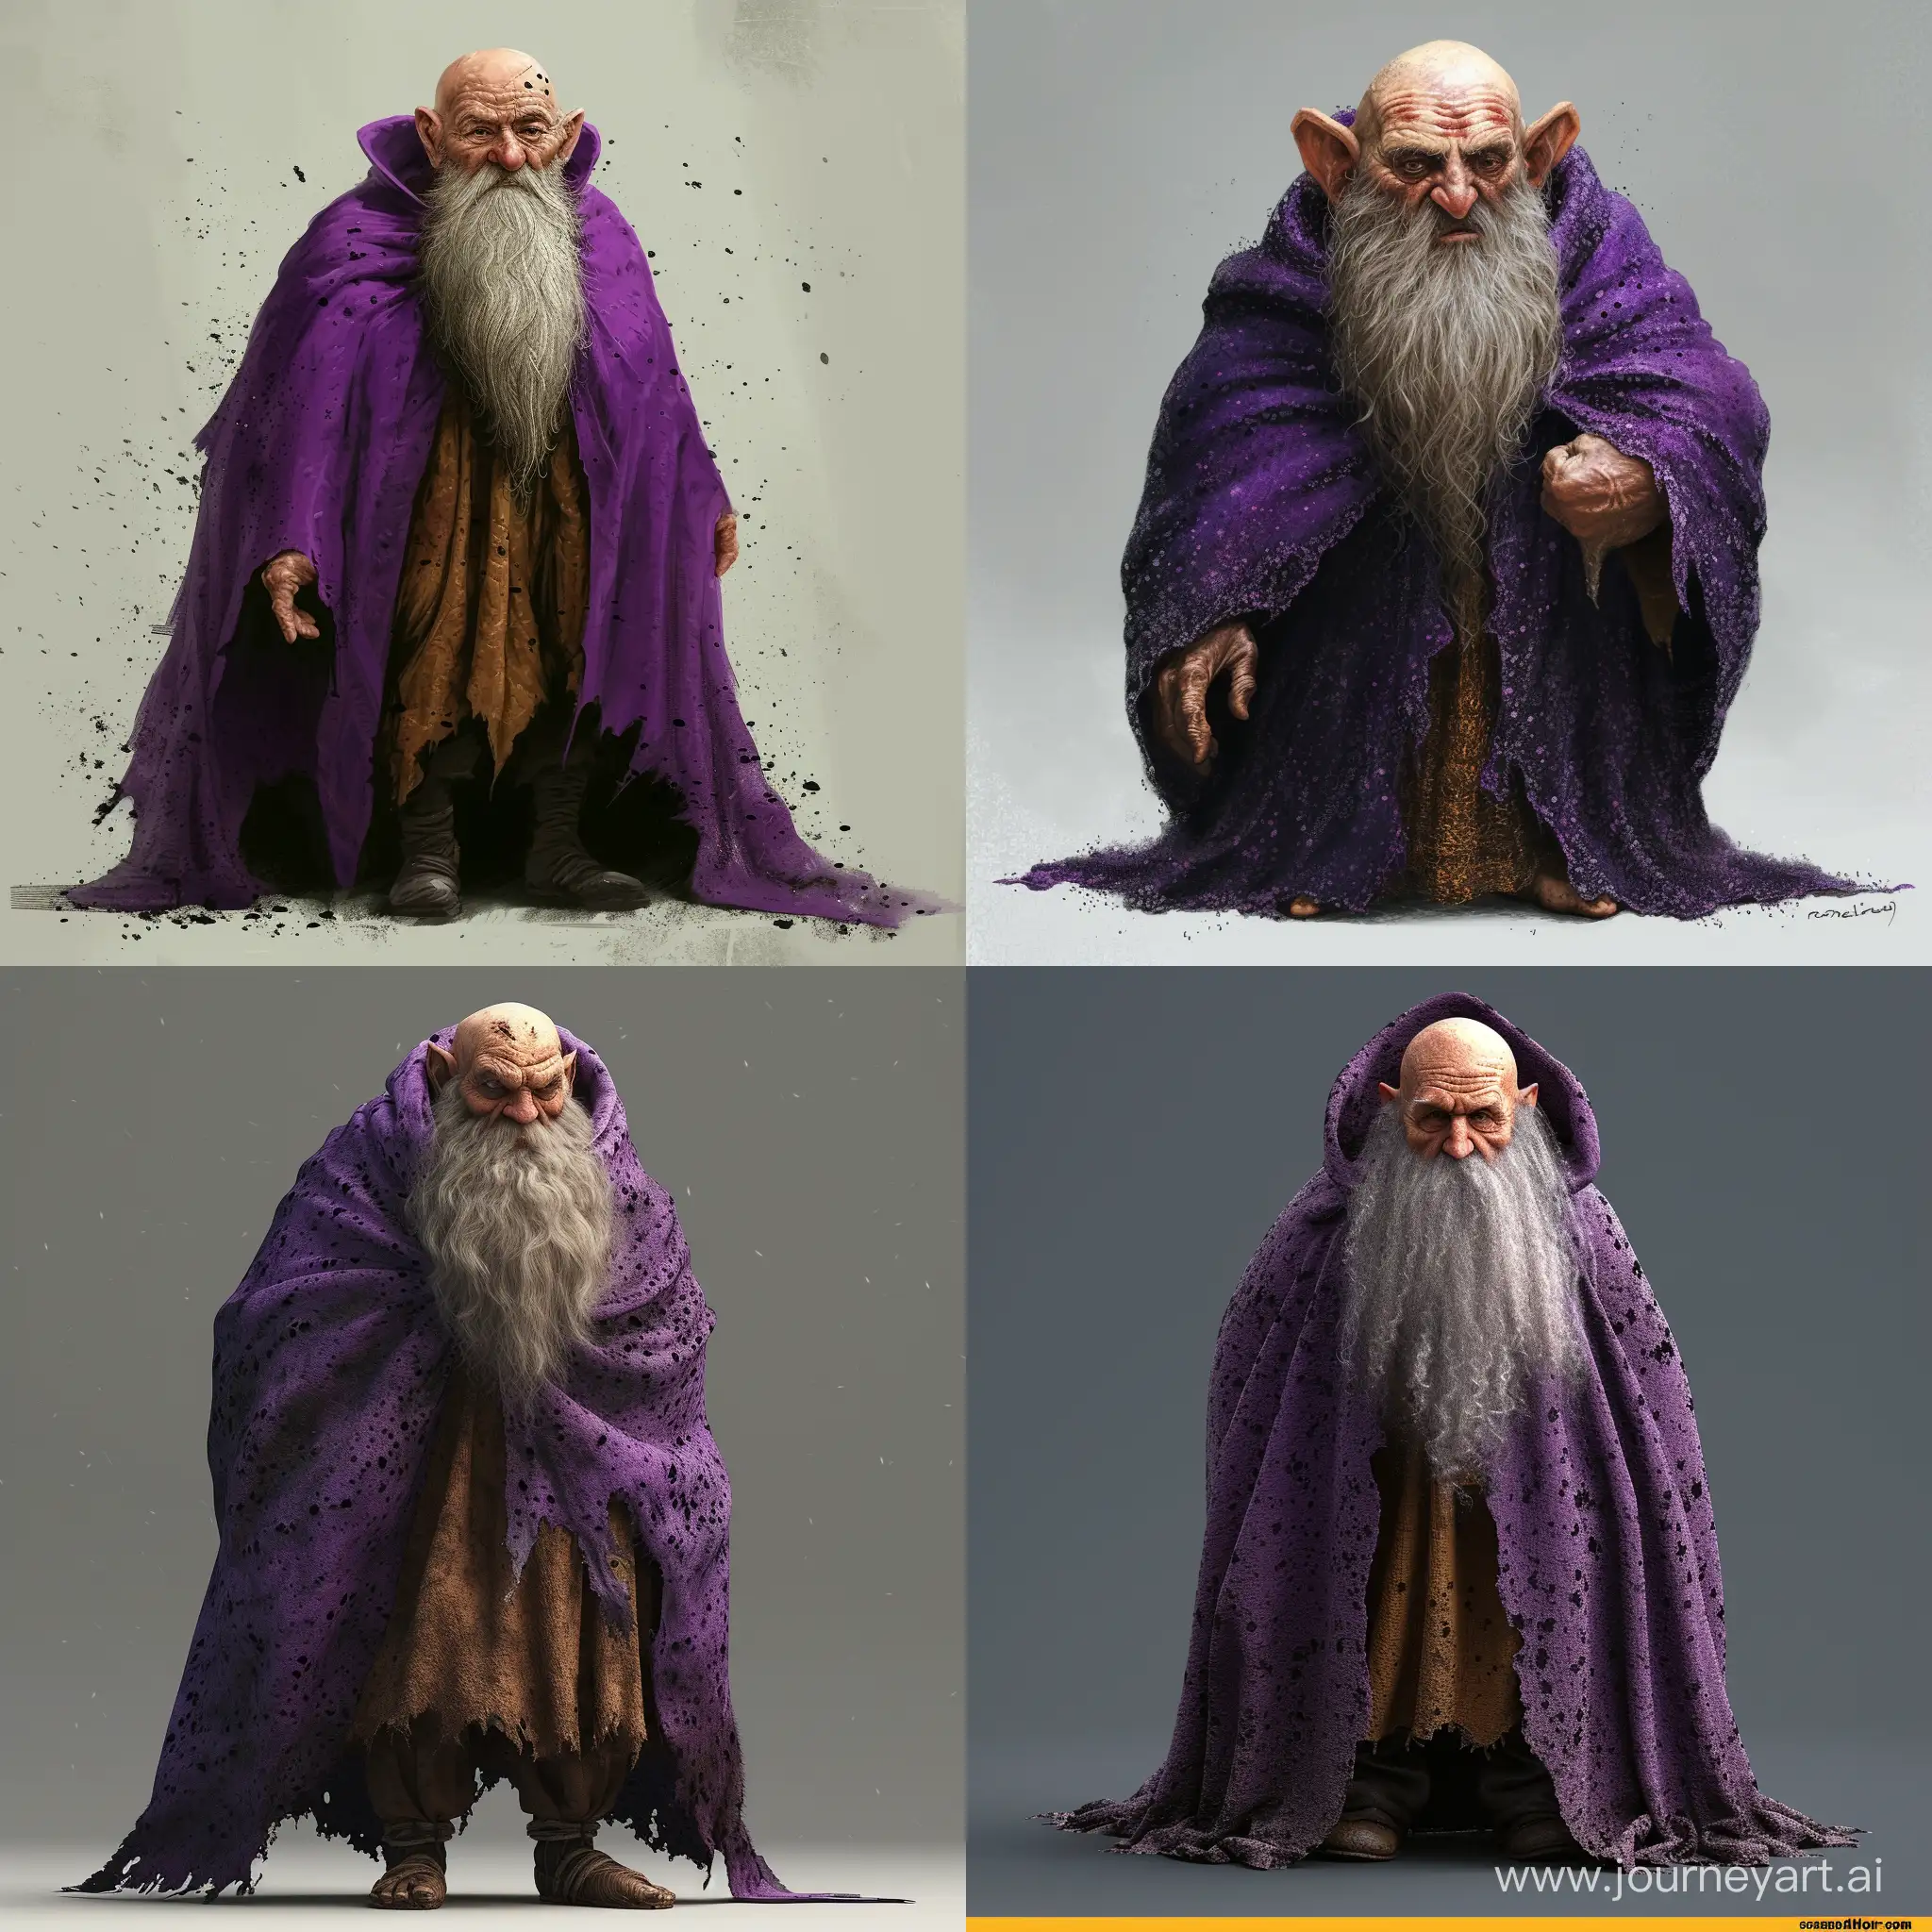 dwarf, wizard, old, big beard, hermit, bald, purple mantle with black speckles